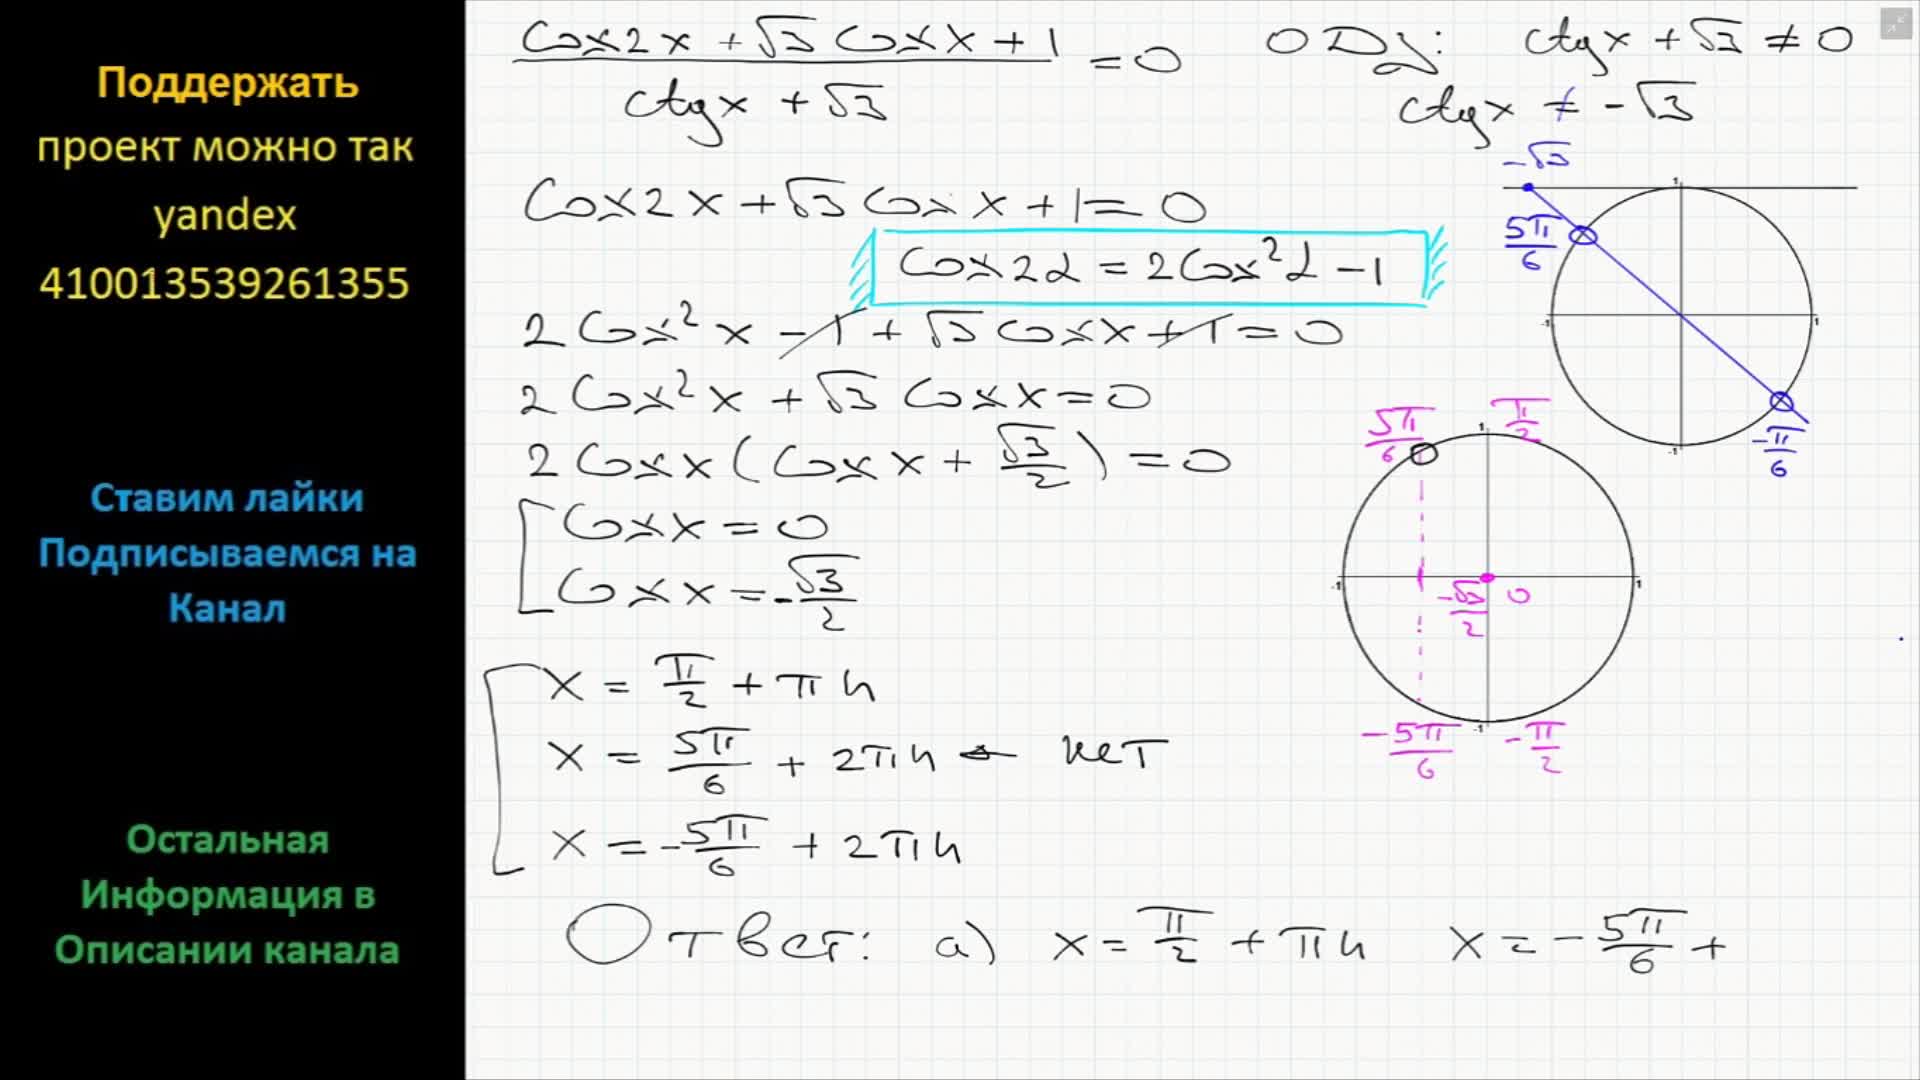 Корень 2cosx sinx корень 3. Cosx 1 2 решение уравнения. Cosx корень из 3. CTG X корень из 3 /3 решение. CTG X < корень 2/2.